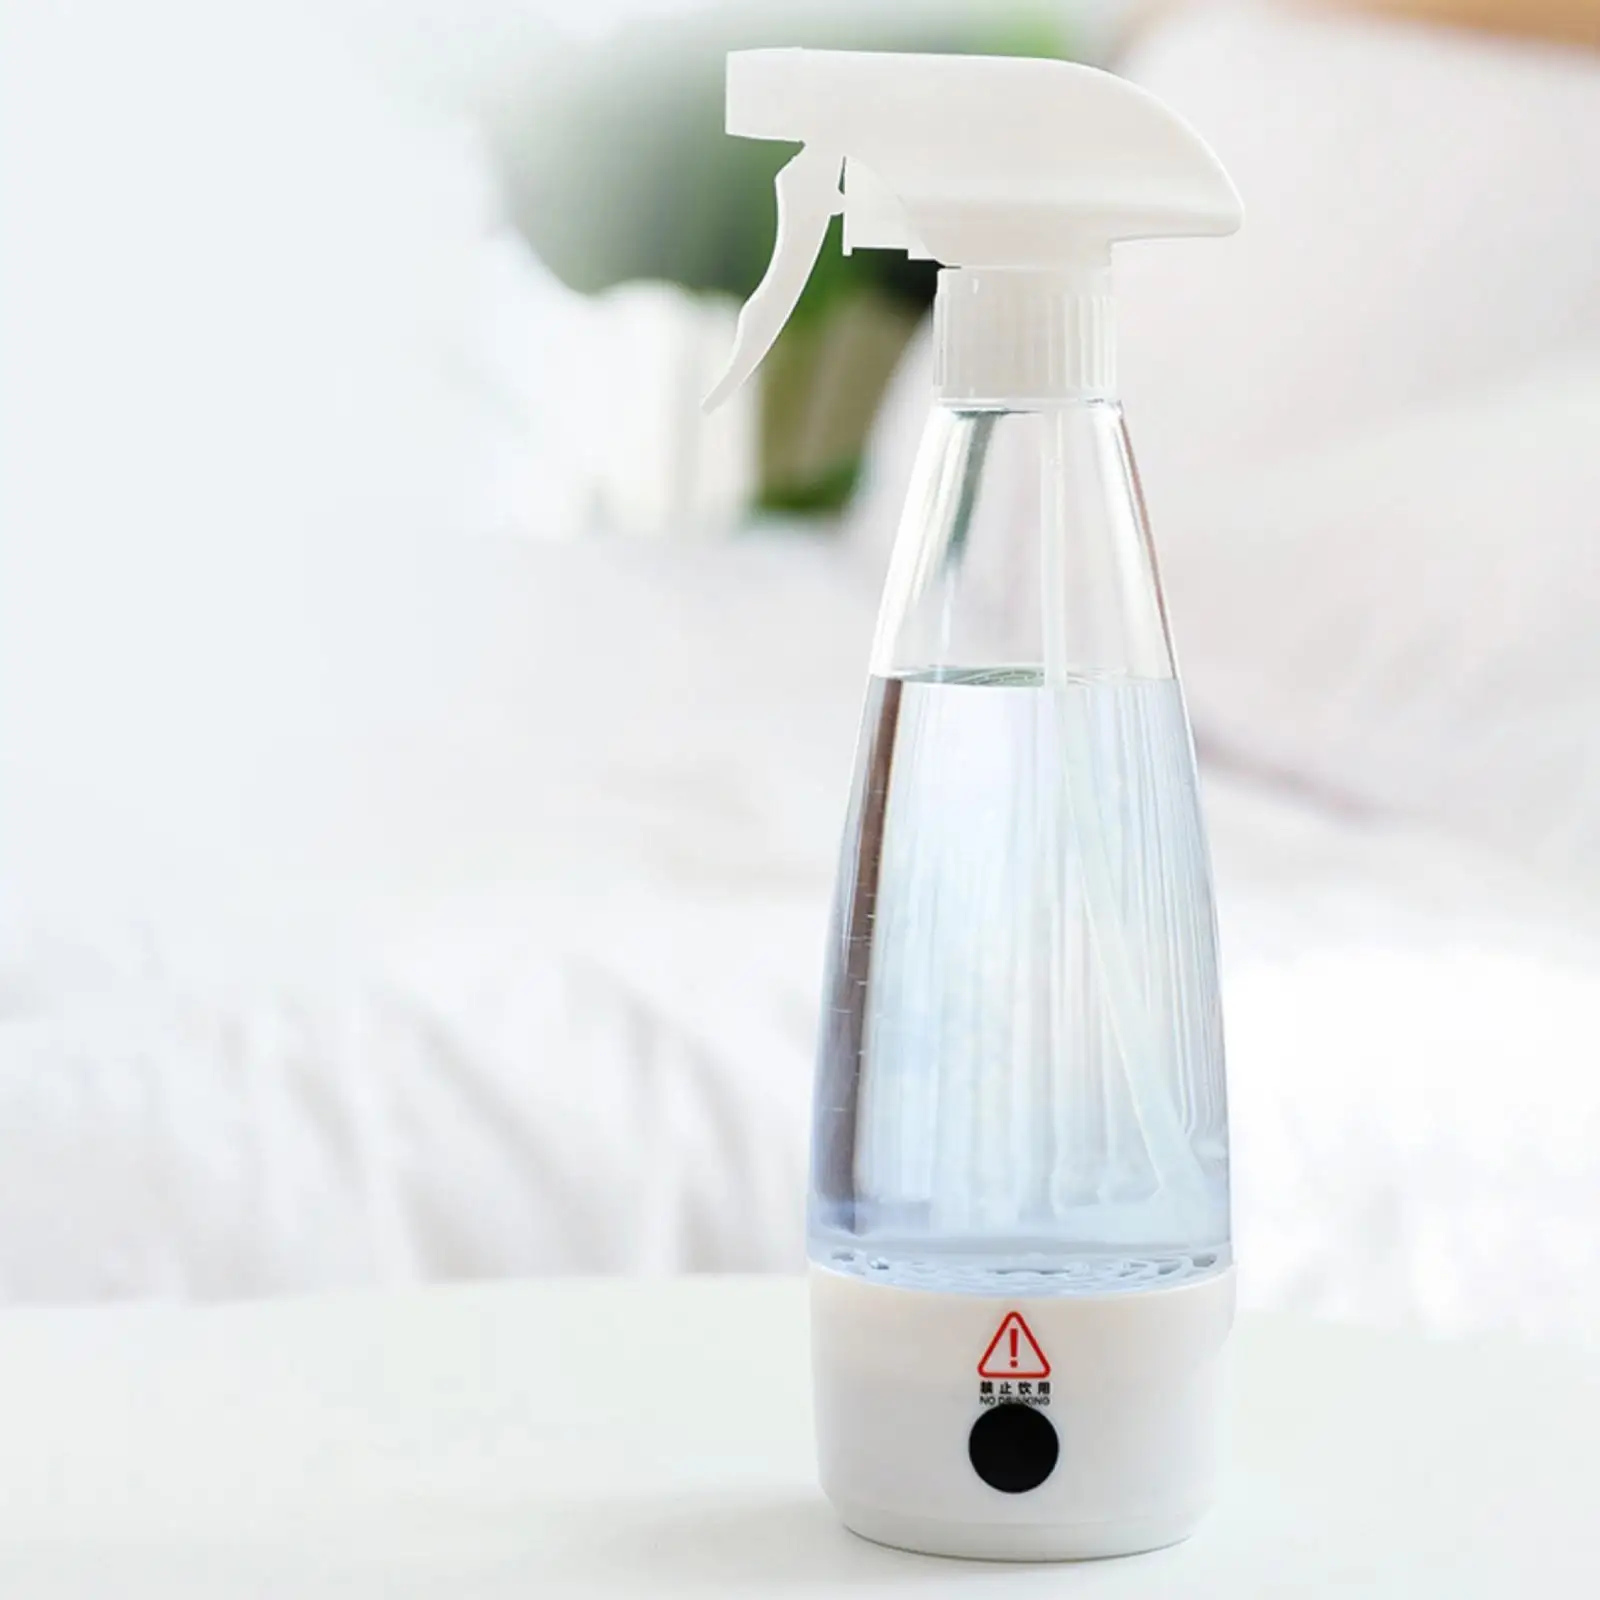 Portable Detergent Spray Bottle Household Cleaning water Bottle 350ml Refill Empty for Bathroom Toilet Home Living Room